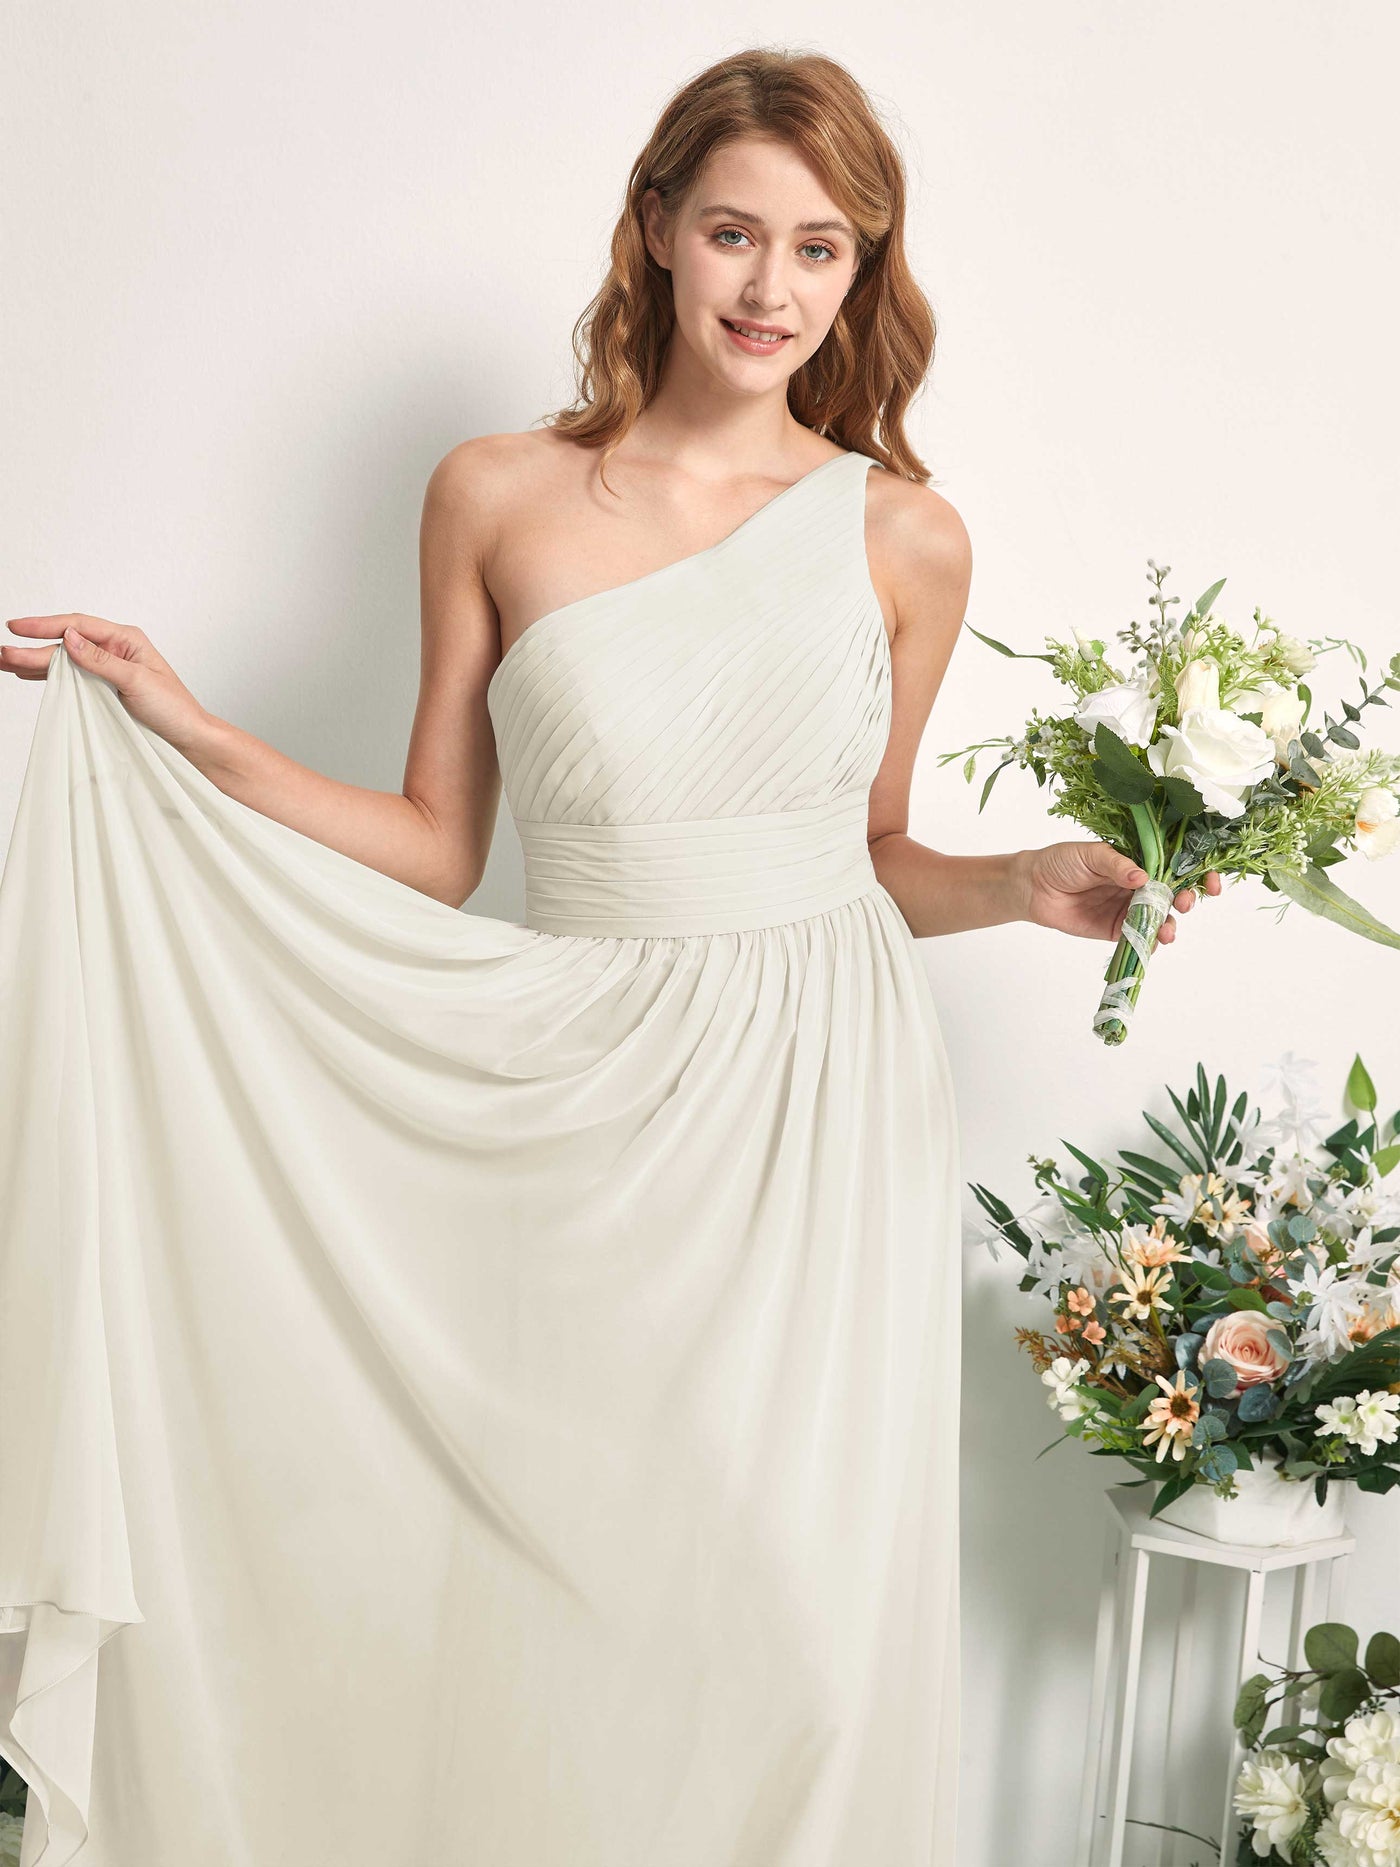 Bridesmaid Dress A-line Chiffon One Shoulder Full Length Sleeveless Wedding Party Dress - Ivory (81226726)#color_ivory